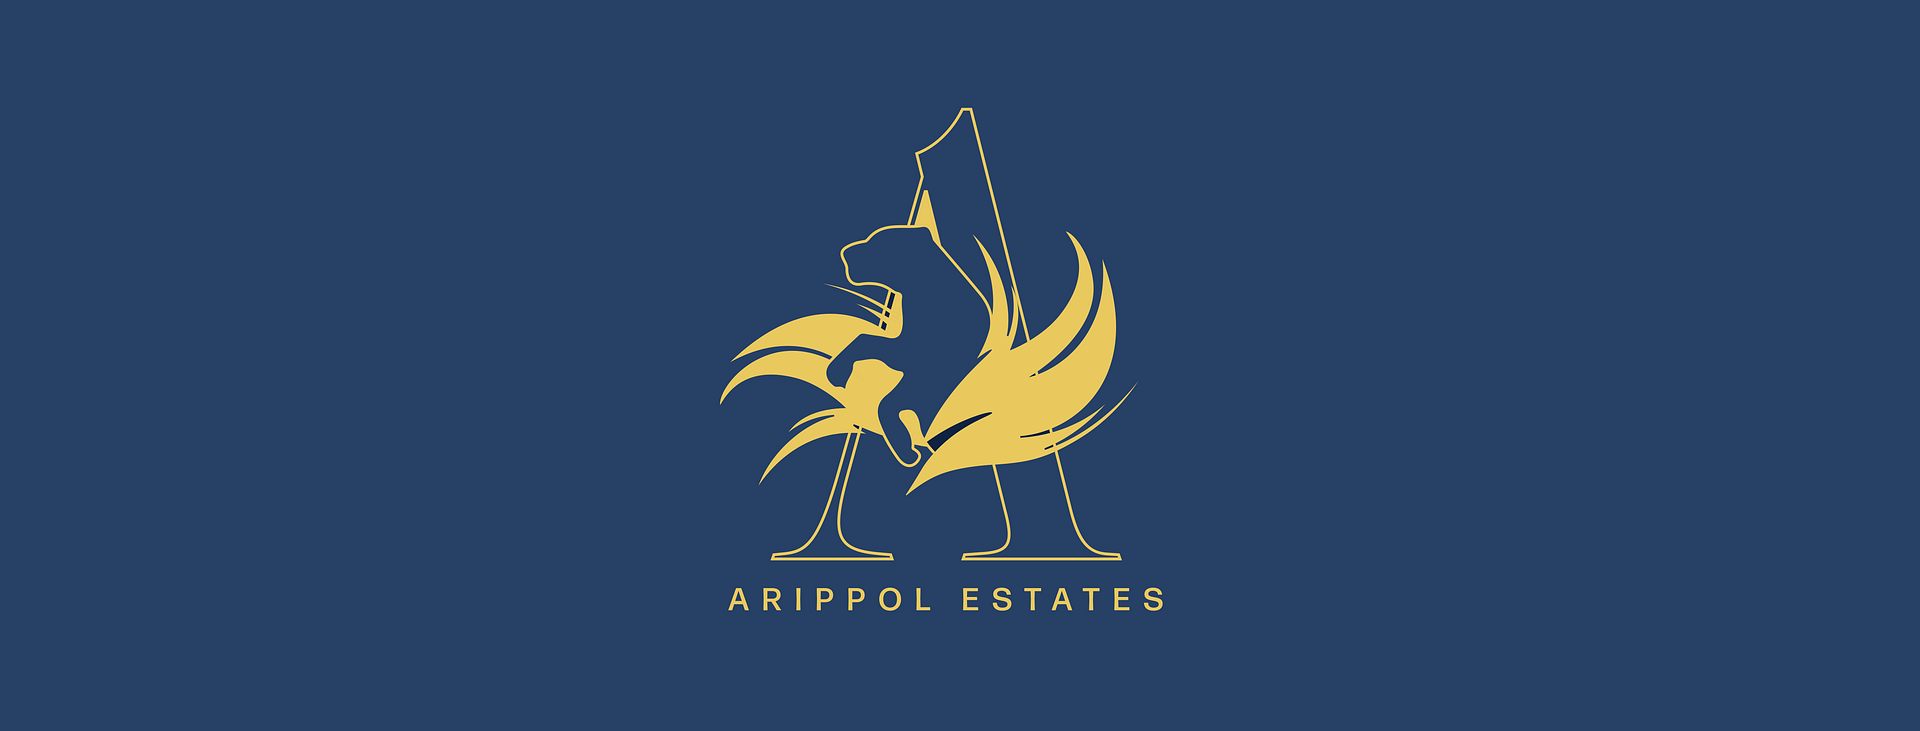 Arippol Estates: Logo de la inmobiliaria.